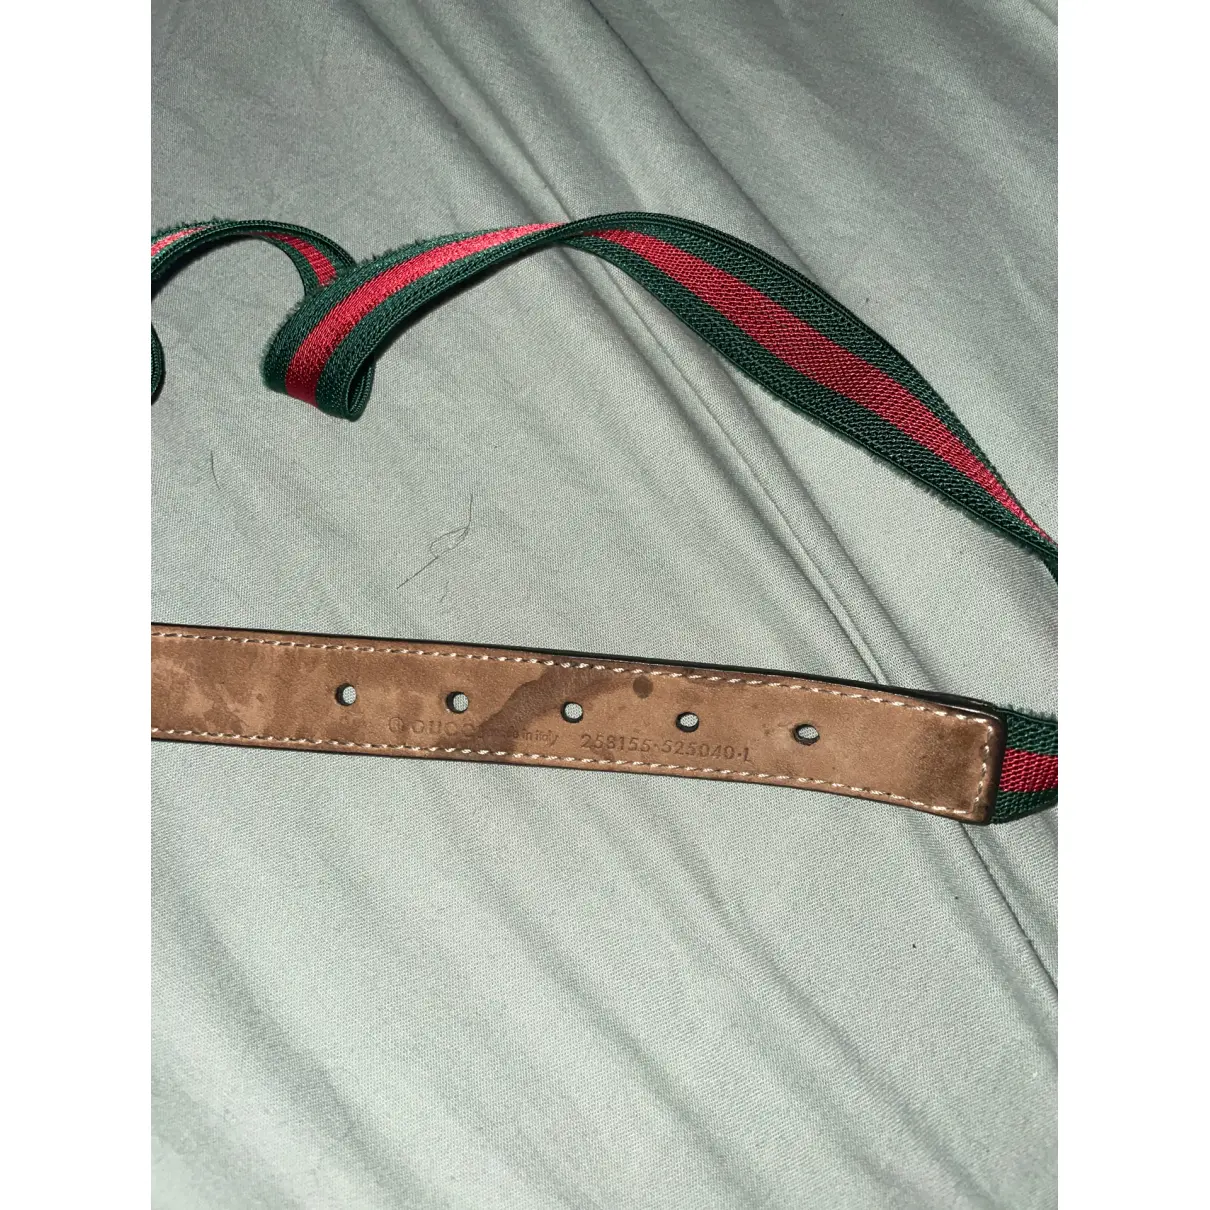 Luxury Gucci Belts.Suspenders Kids